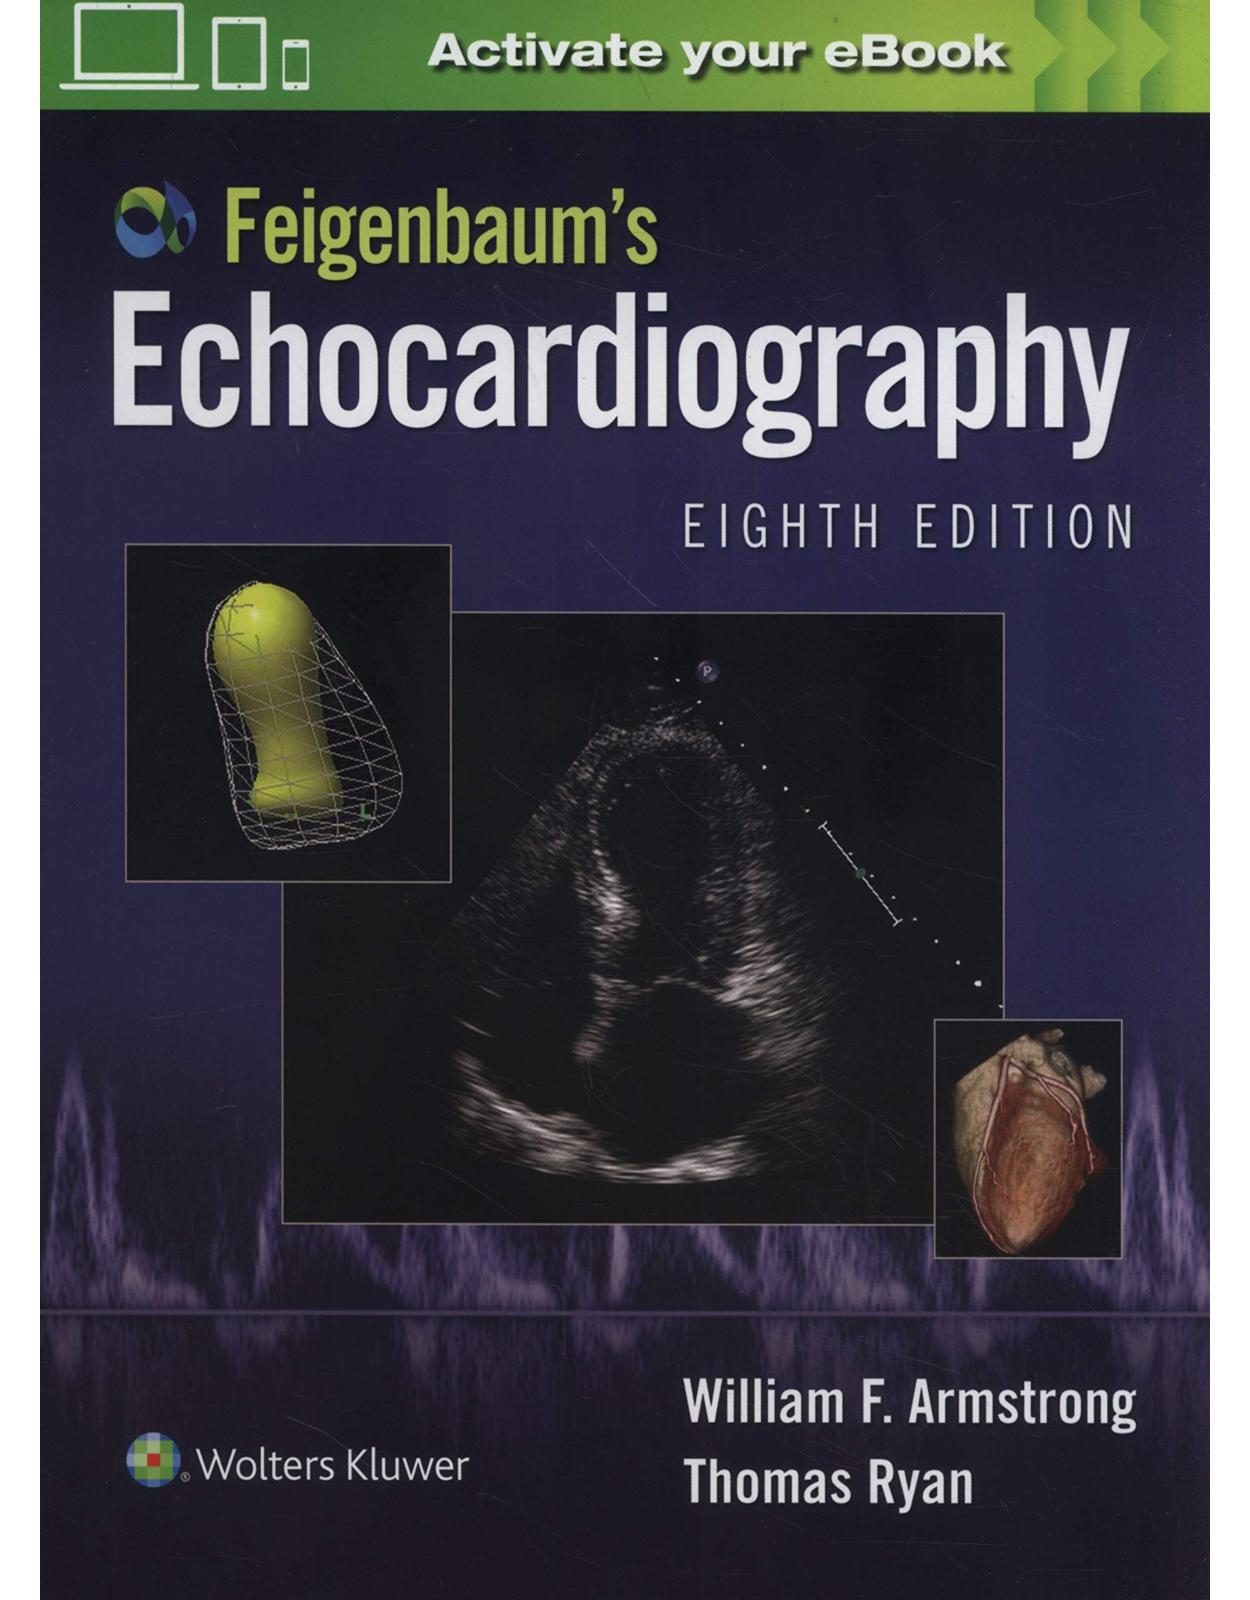 Feigenbaum’s Echocardiography